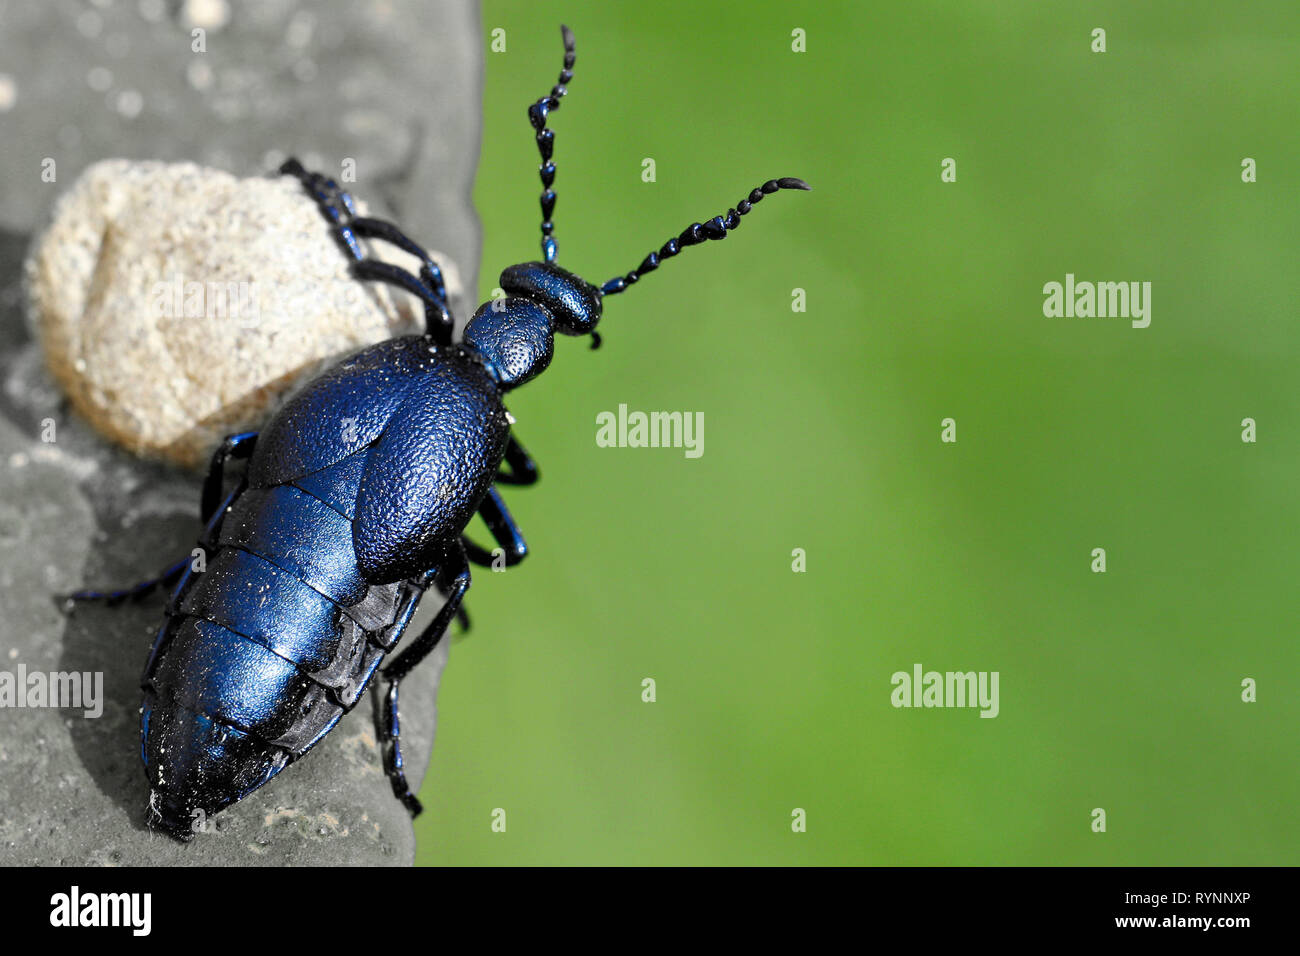 Black oil beetle, Meloe proscarabaeus, looks around the corner with copy space Stock Photo